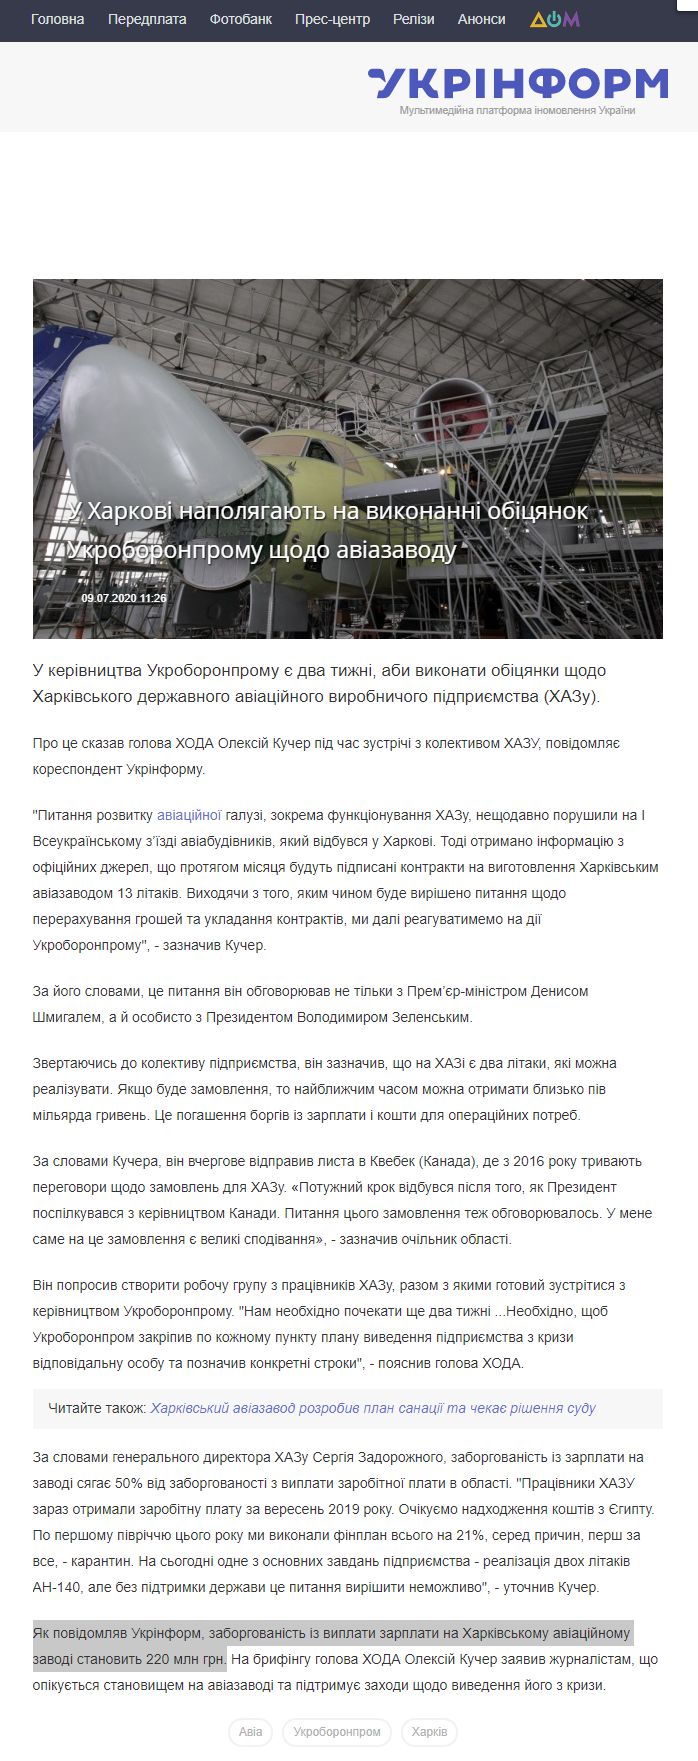 https://www.ukrinform.ua/rubric-economy/3059801-u-harkovi-napolagaut-na-vikonanni-obicanok-ukroboronpromu-sodo-aviazavodu.html